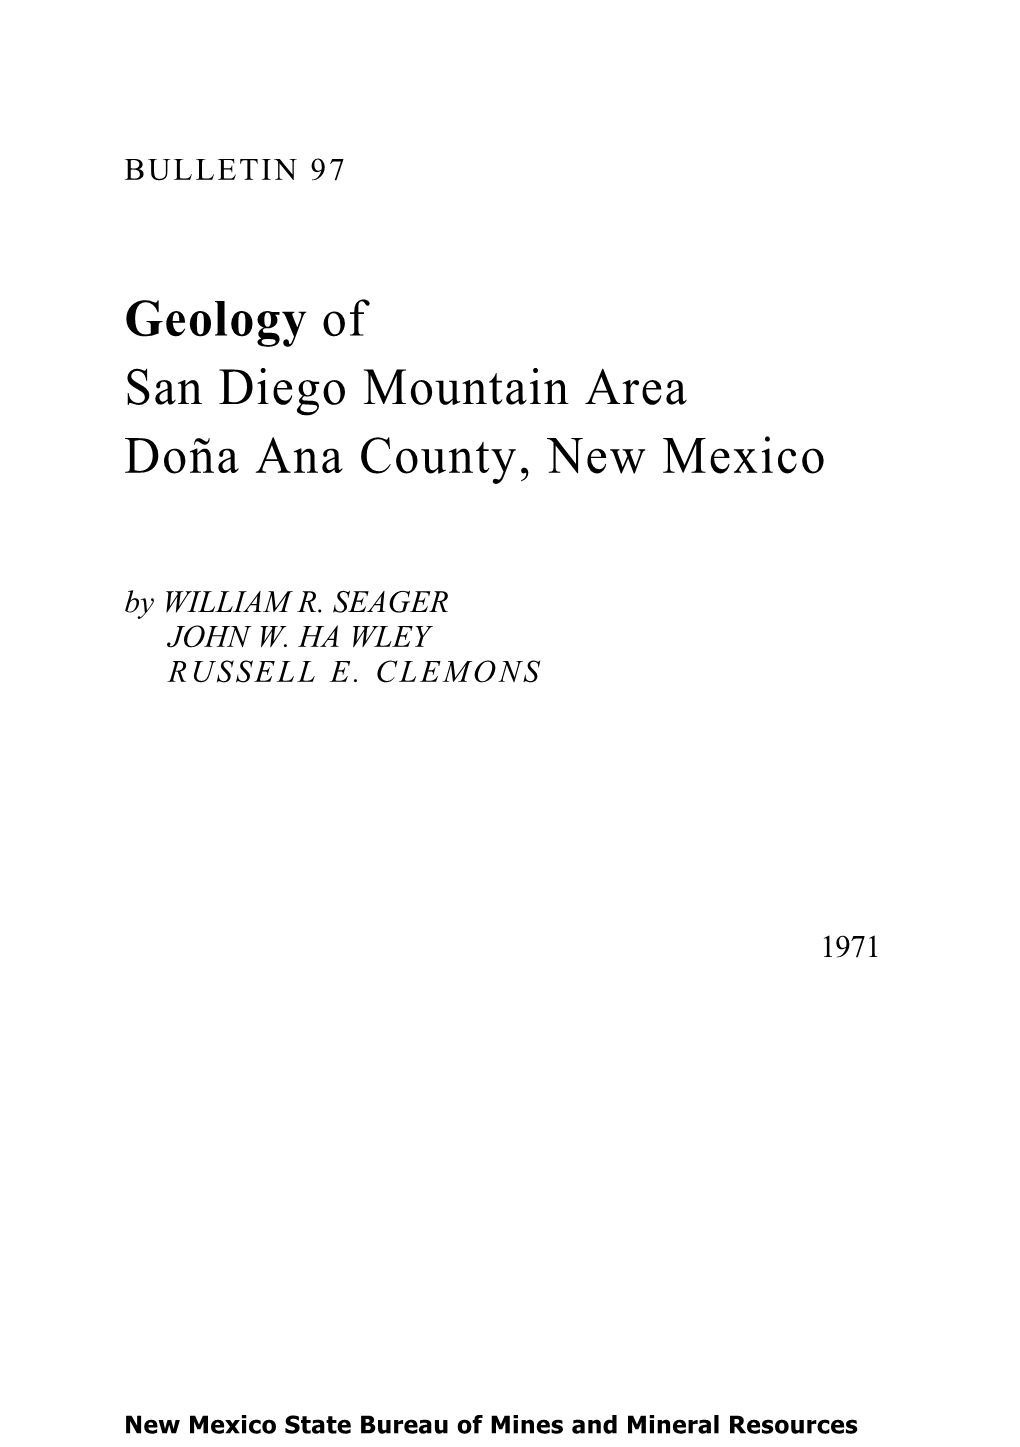 Geology of San Diego Mountain Area, Dona Ana County, New Mexico